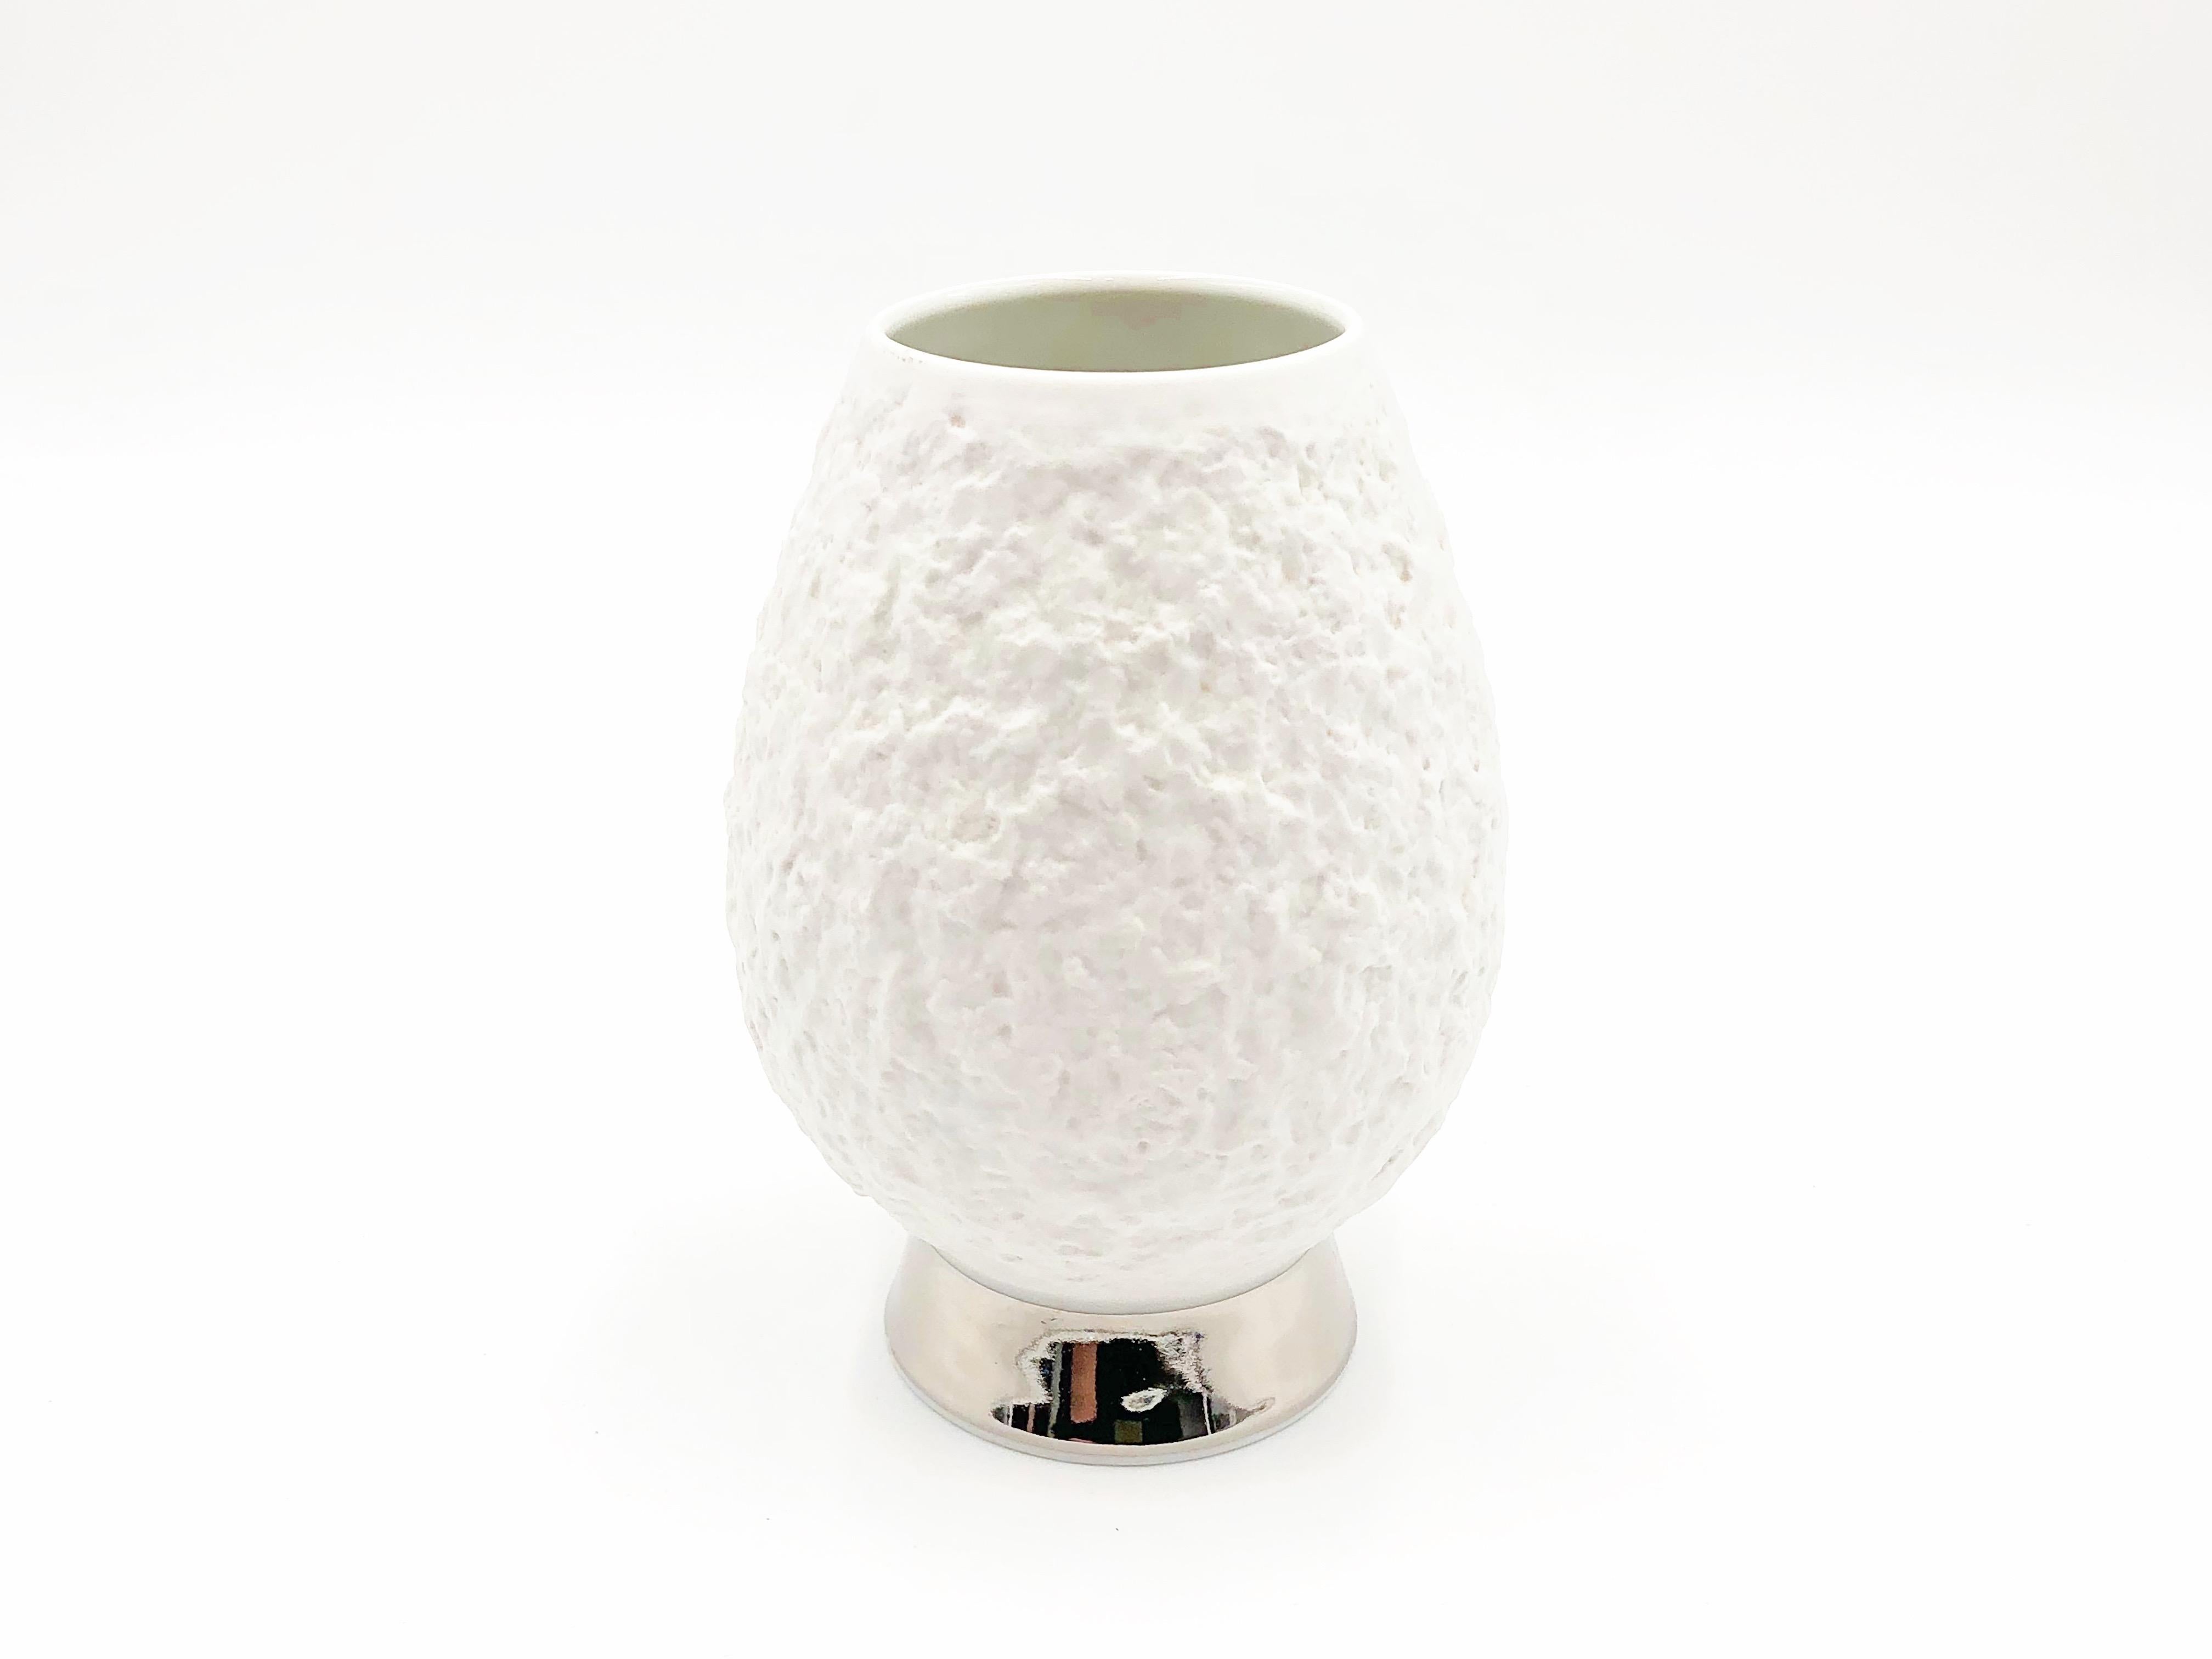 Mid-Century Modern porcelain vase by KPM Royal Porcelain Factory in Germany, circa 1960s.

White matte bisque unglazed textured porcelain vase with silver plate detail on base. Interior is glazed. Marked KPM on base.

Details:
- 6.2